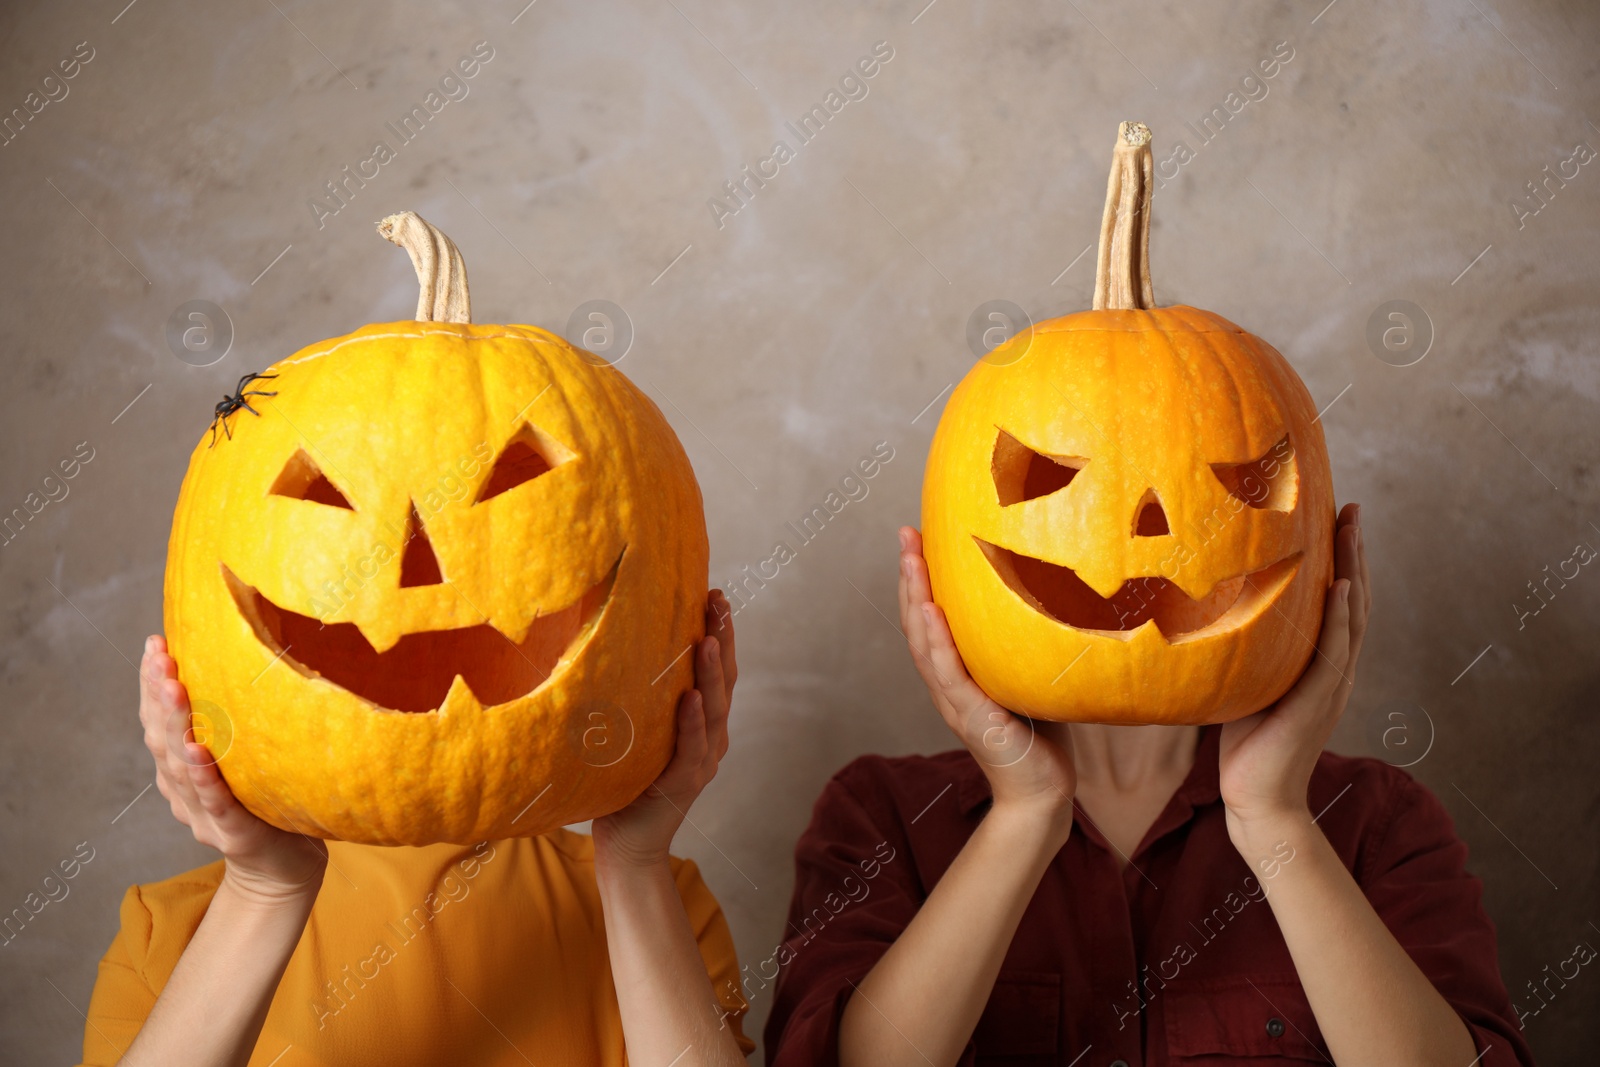 Photo of Women with pumpkin heads against beige background. Jack lantern - traditional Halloween decor